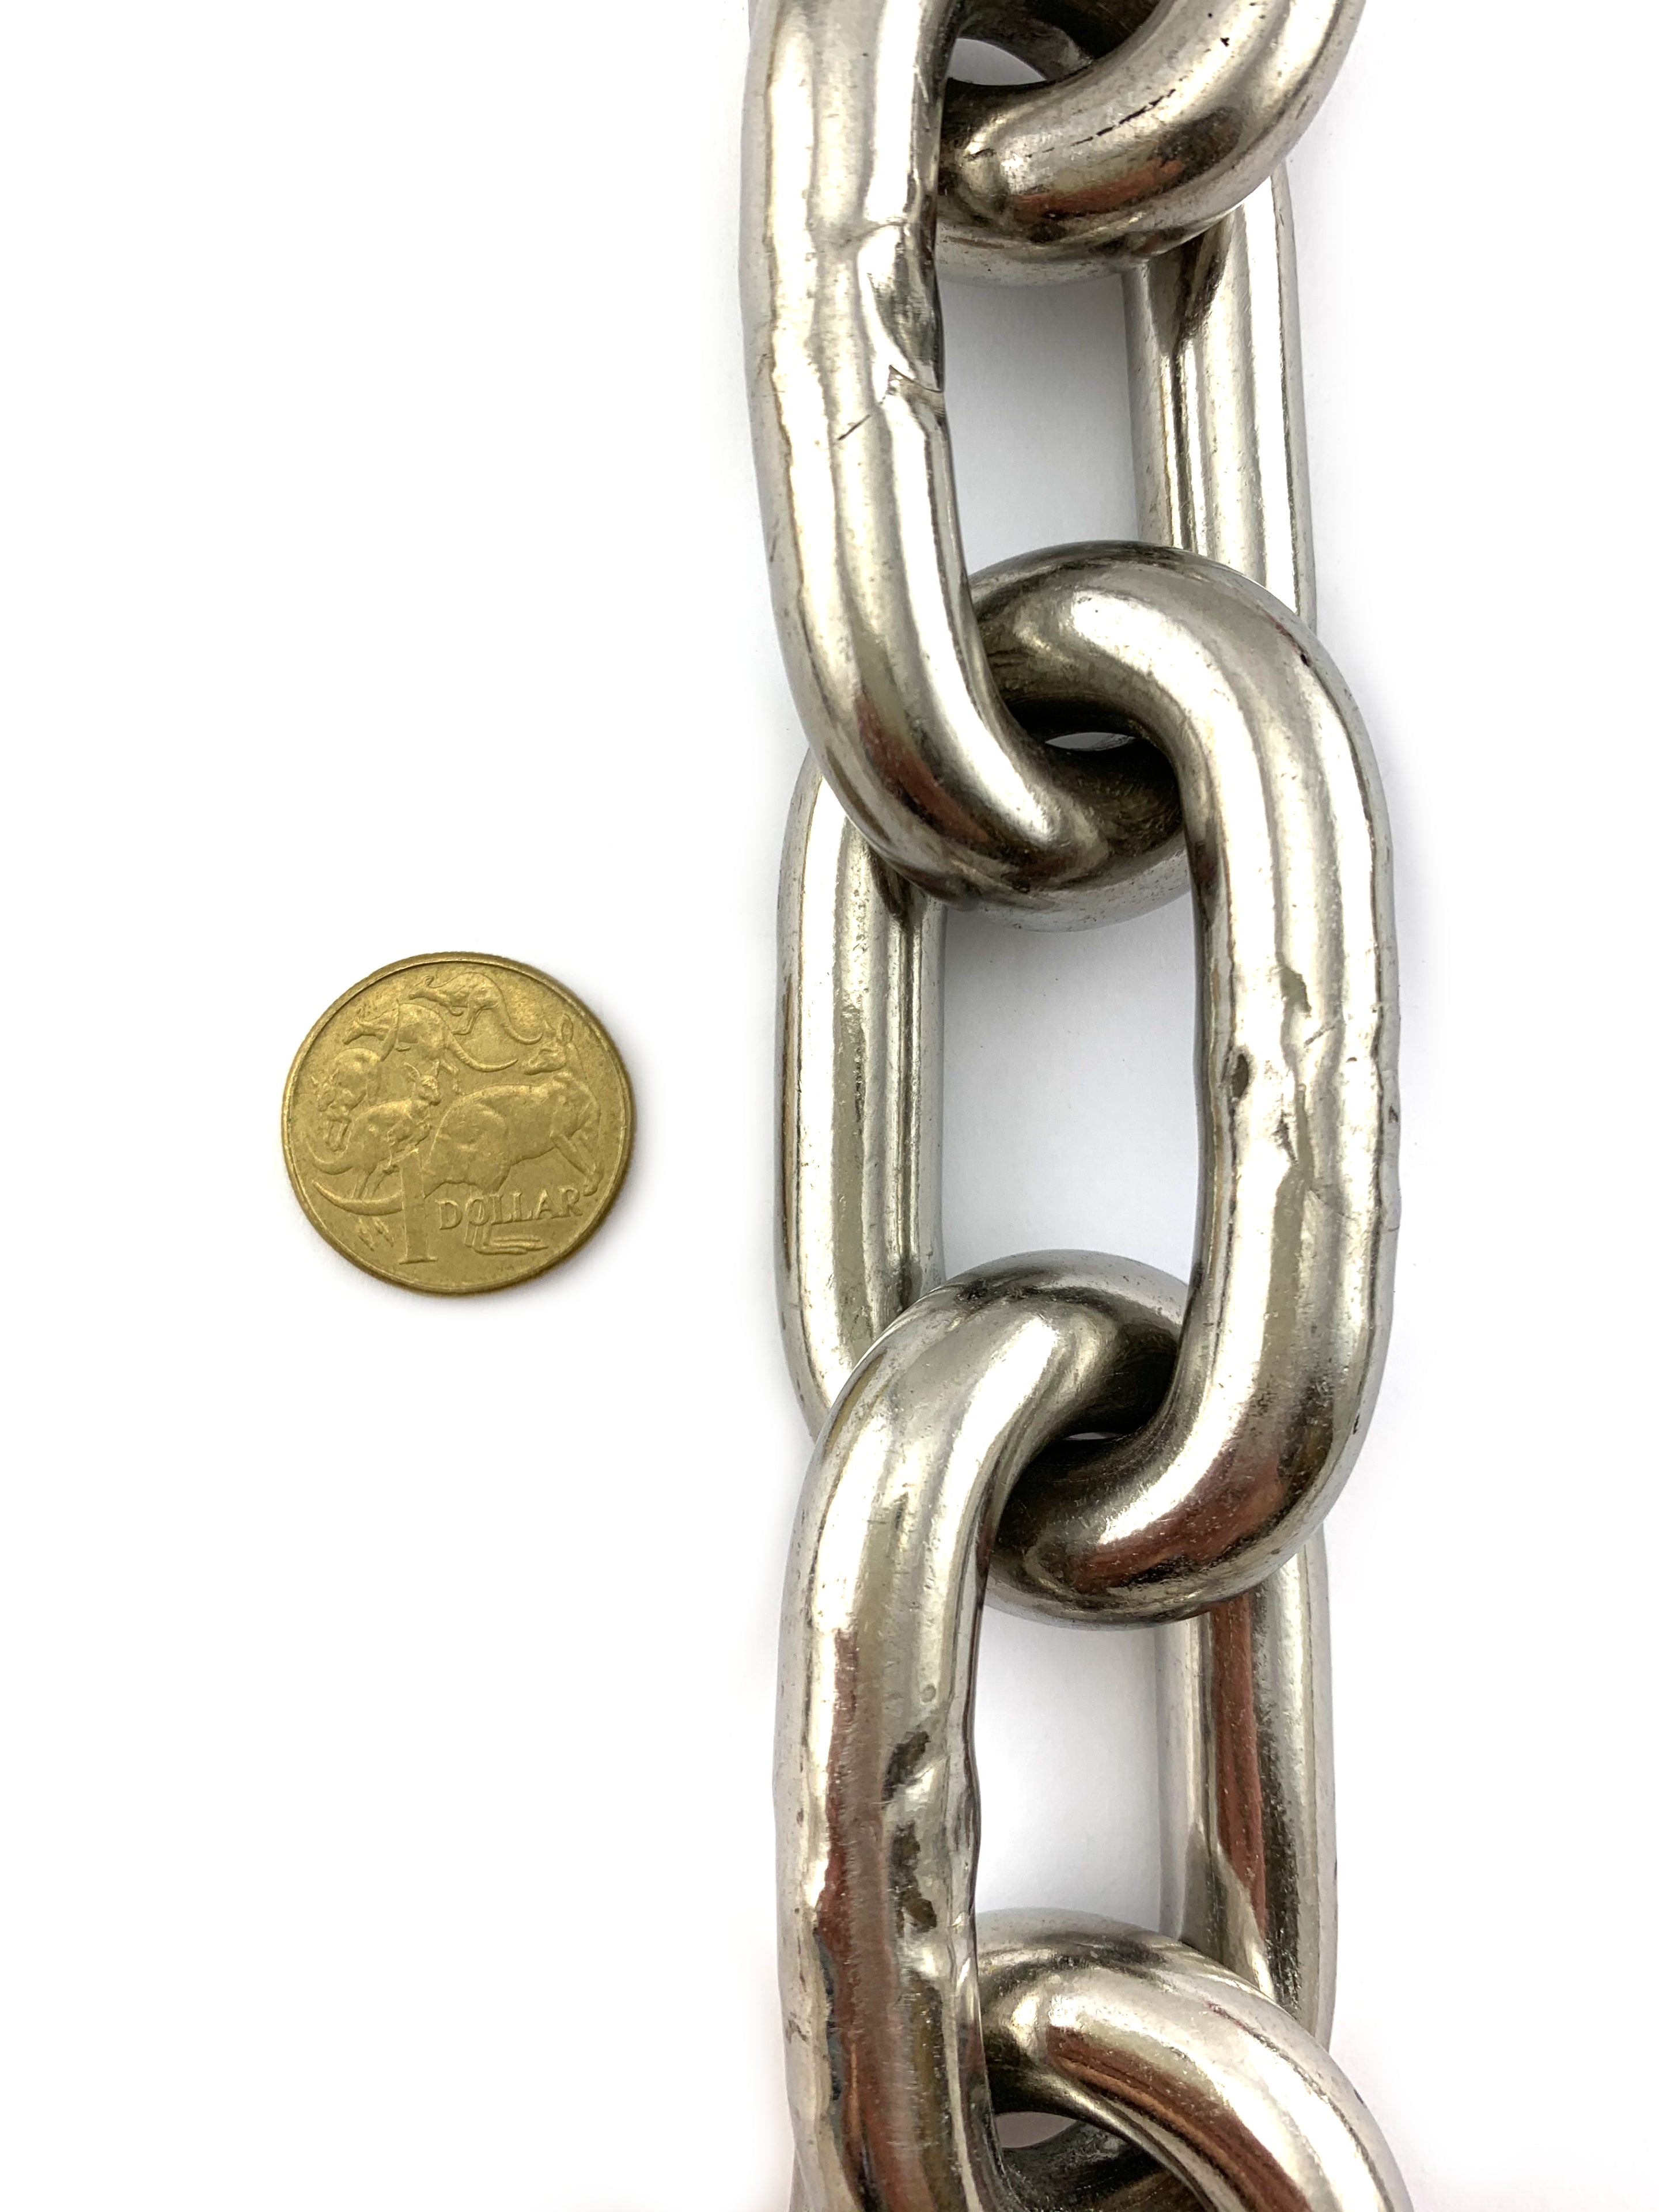 Stainless Steel Welded Link Chain - 13mm x 25kg. Australia.